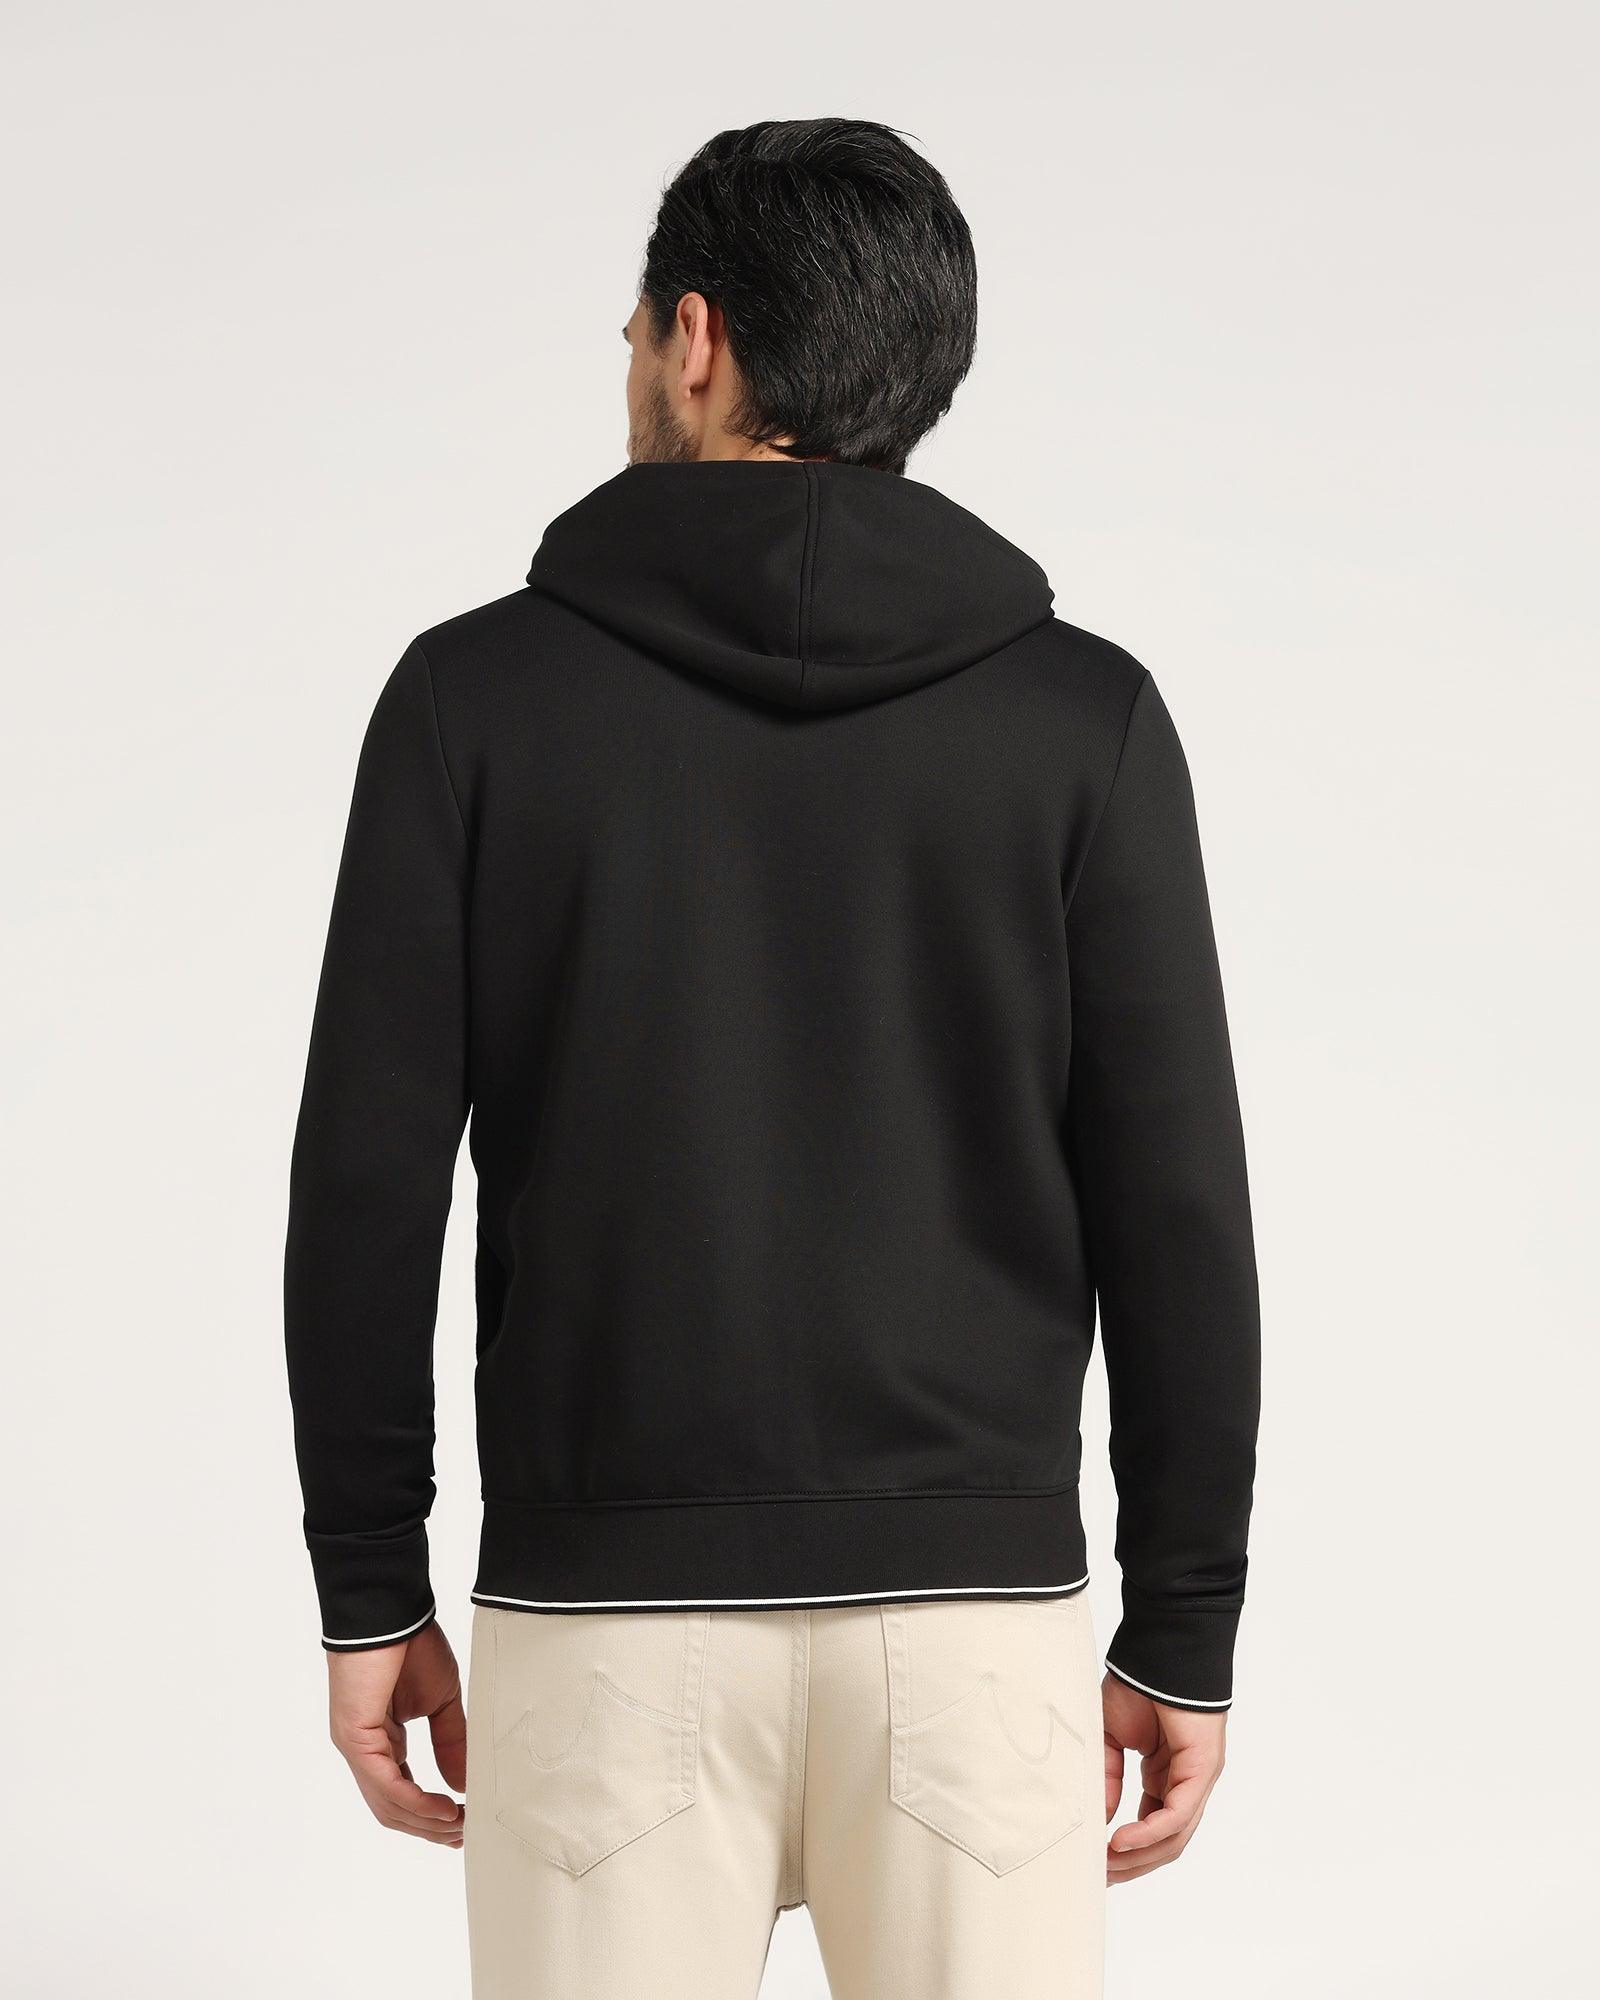 Hoodie Black Solid Sweatshirt - Morgo